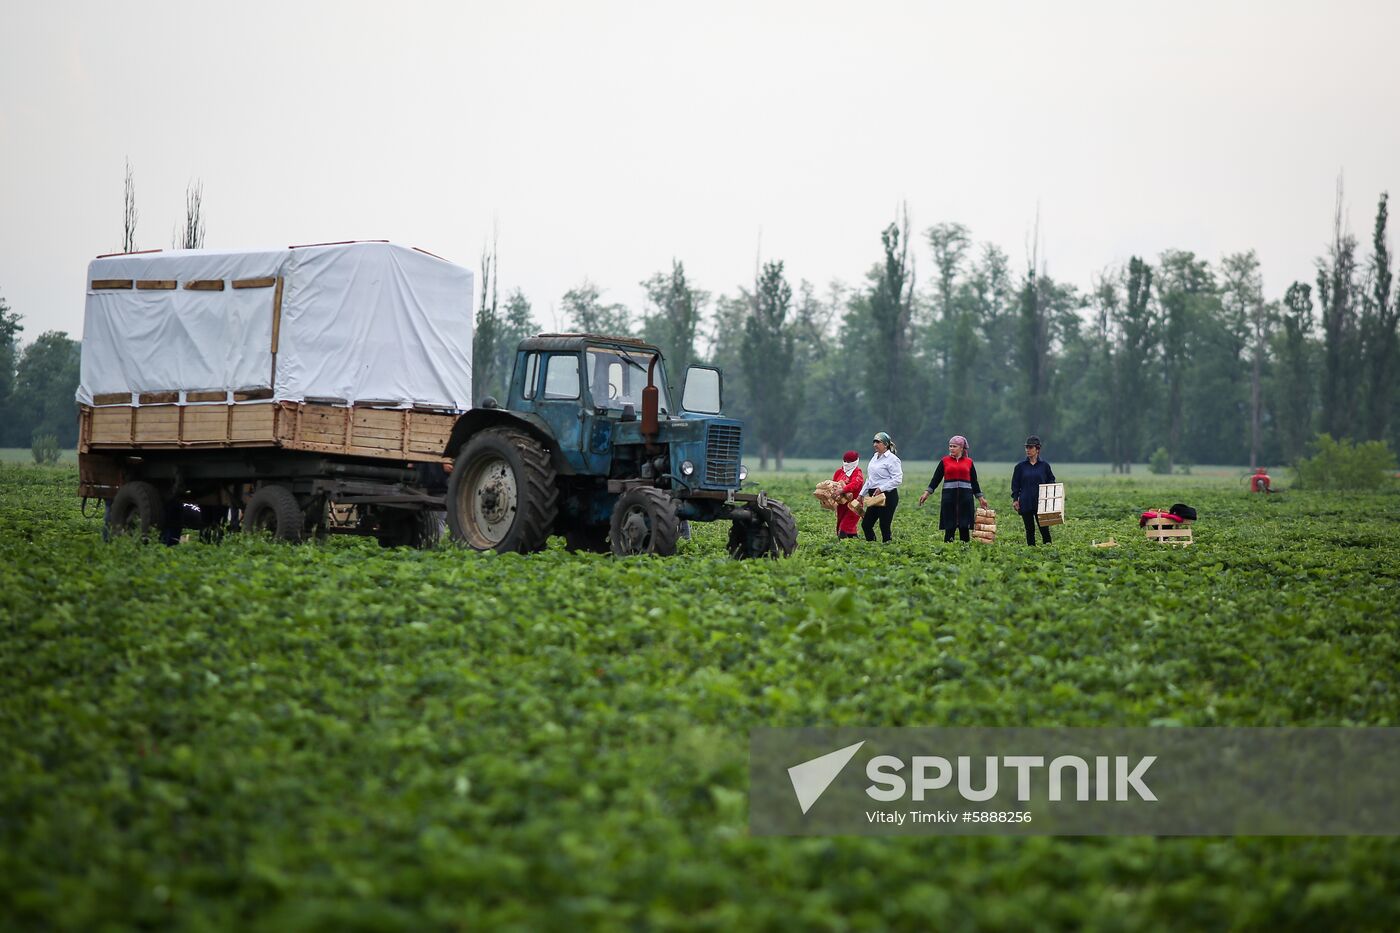 Russia Strawberry Harvest